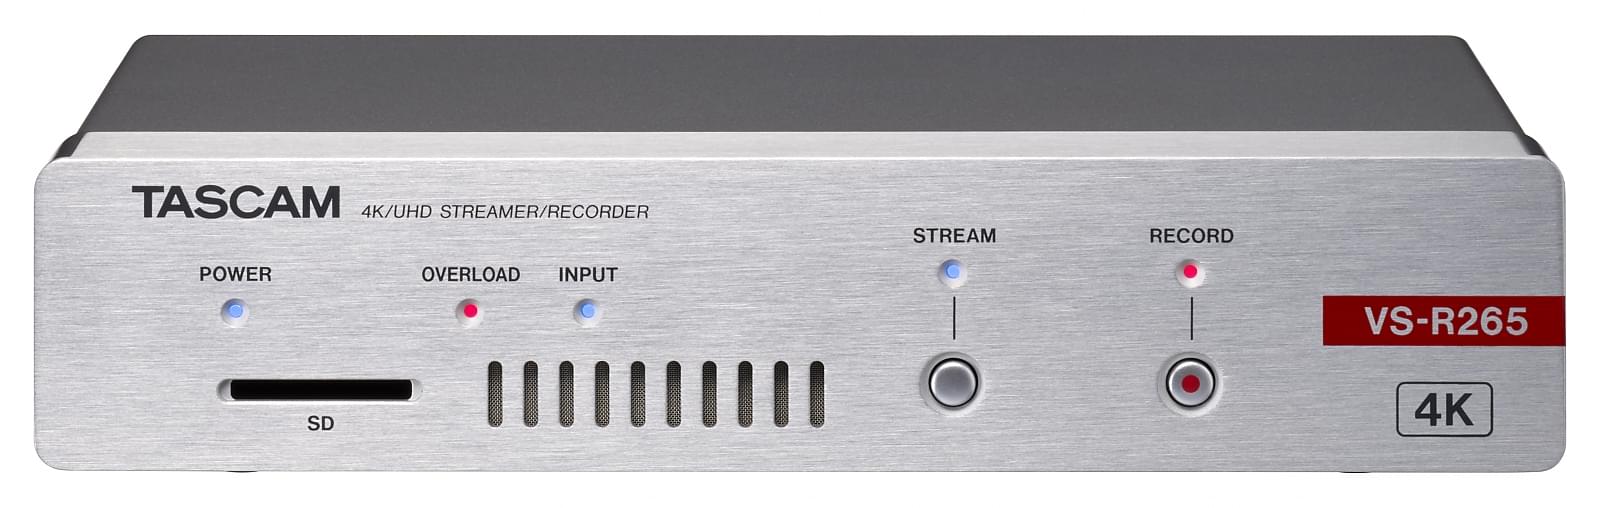 4K/UHD Encoder, Decoder, Streamer and Recorder | Tascam VS-R265